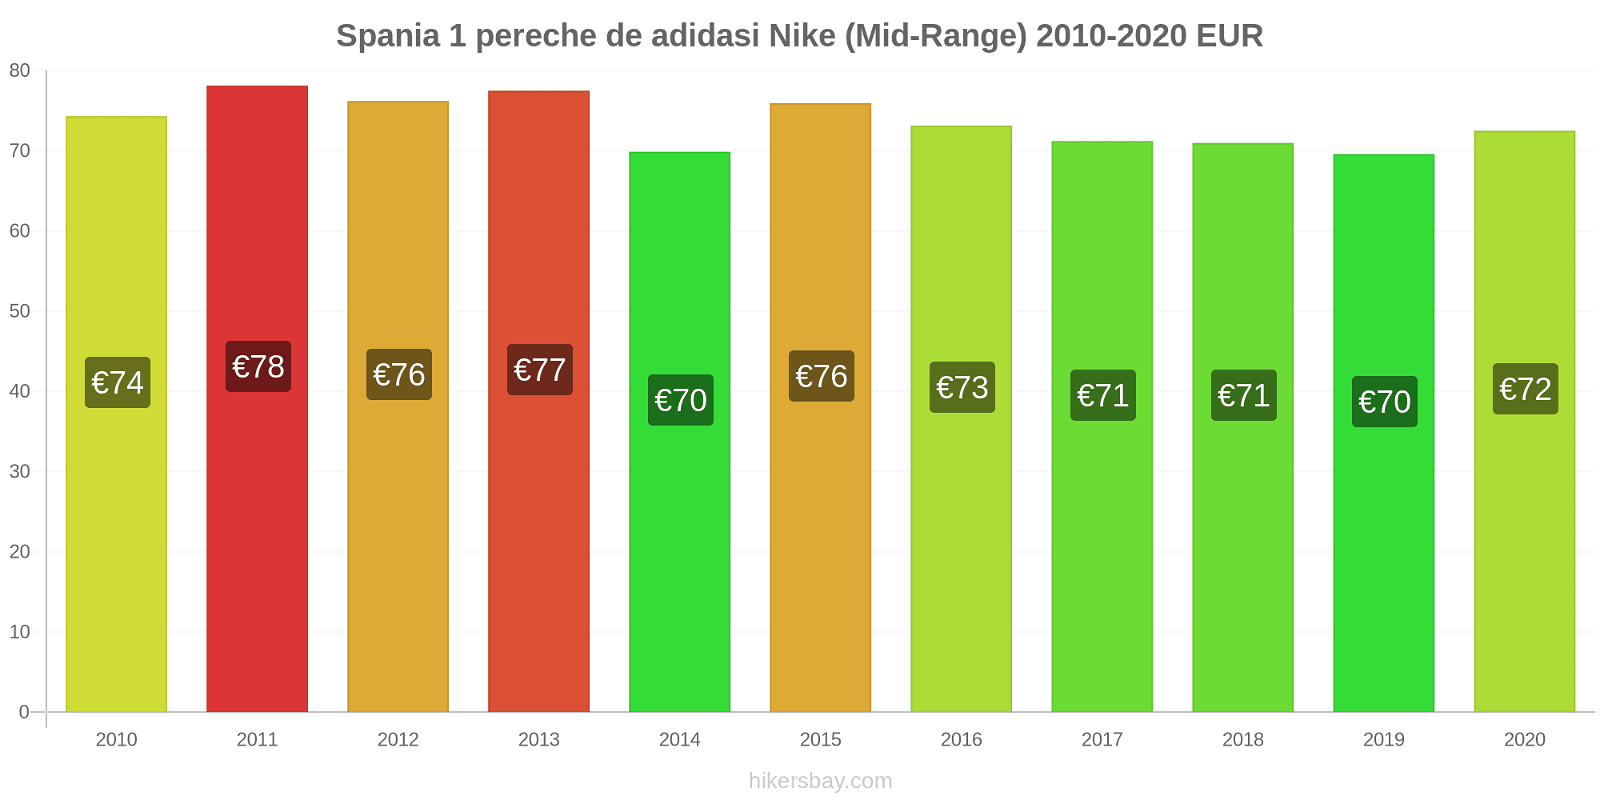 Spania modificări de preț 1 pereche de adidasi Nike (Mid-Range) hikersbay.com